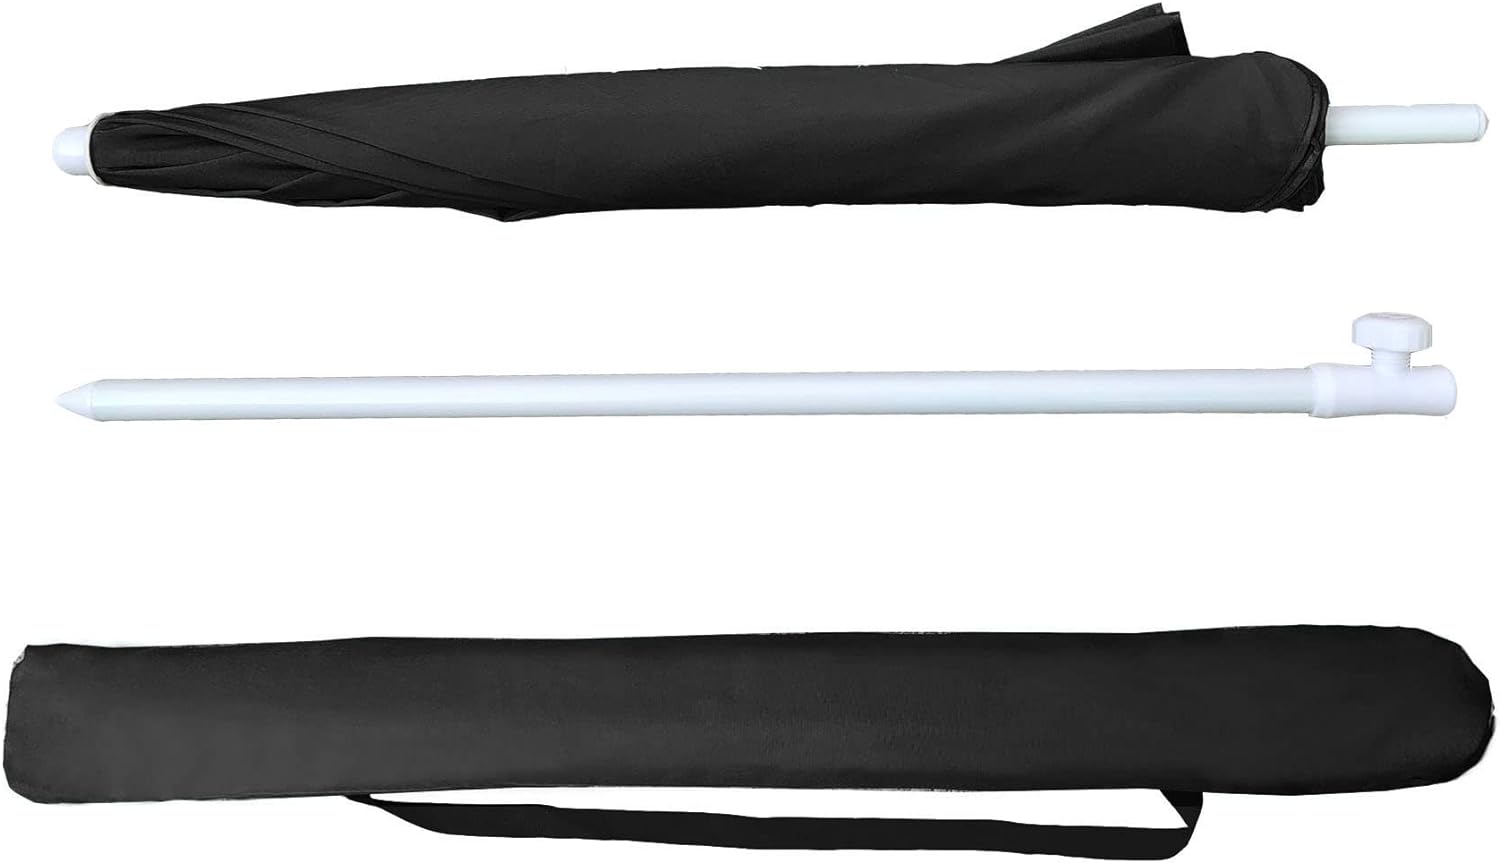 AMMSUN 6FT Portable Outdoor Picnic Beach Umbrella with Tilt Function, Black